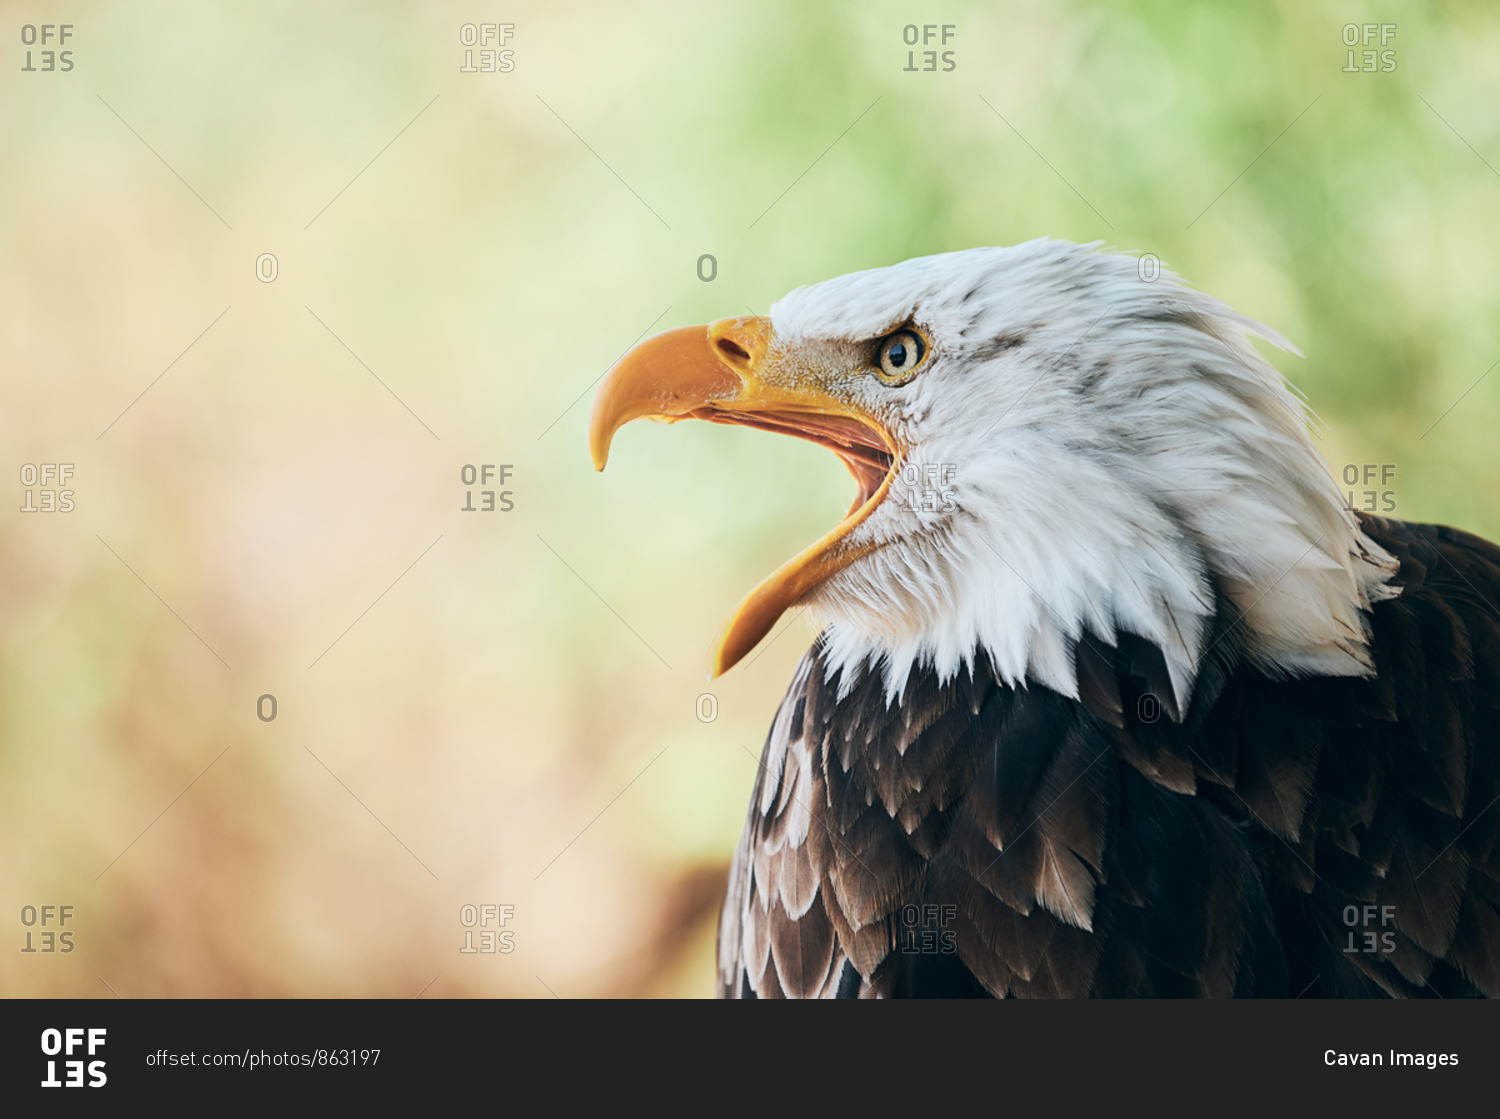 Gorgeous eagle crying with beak wide opened